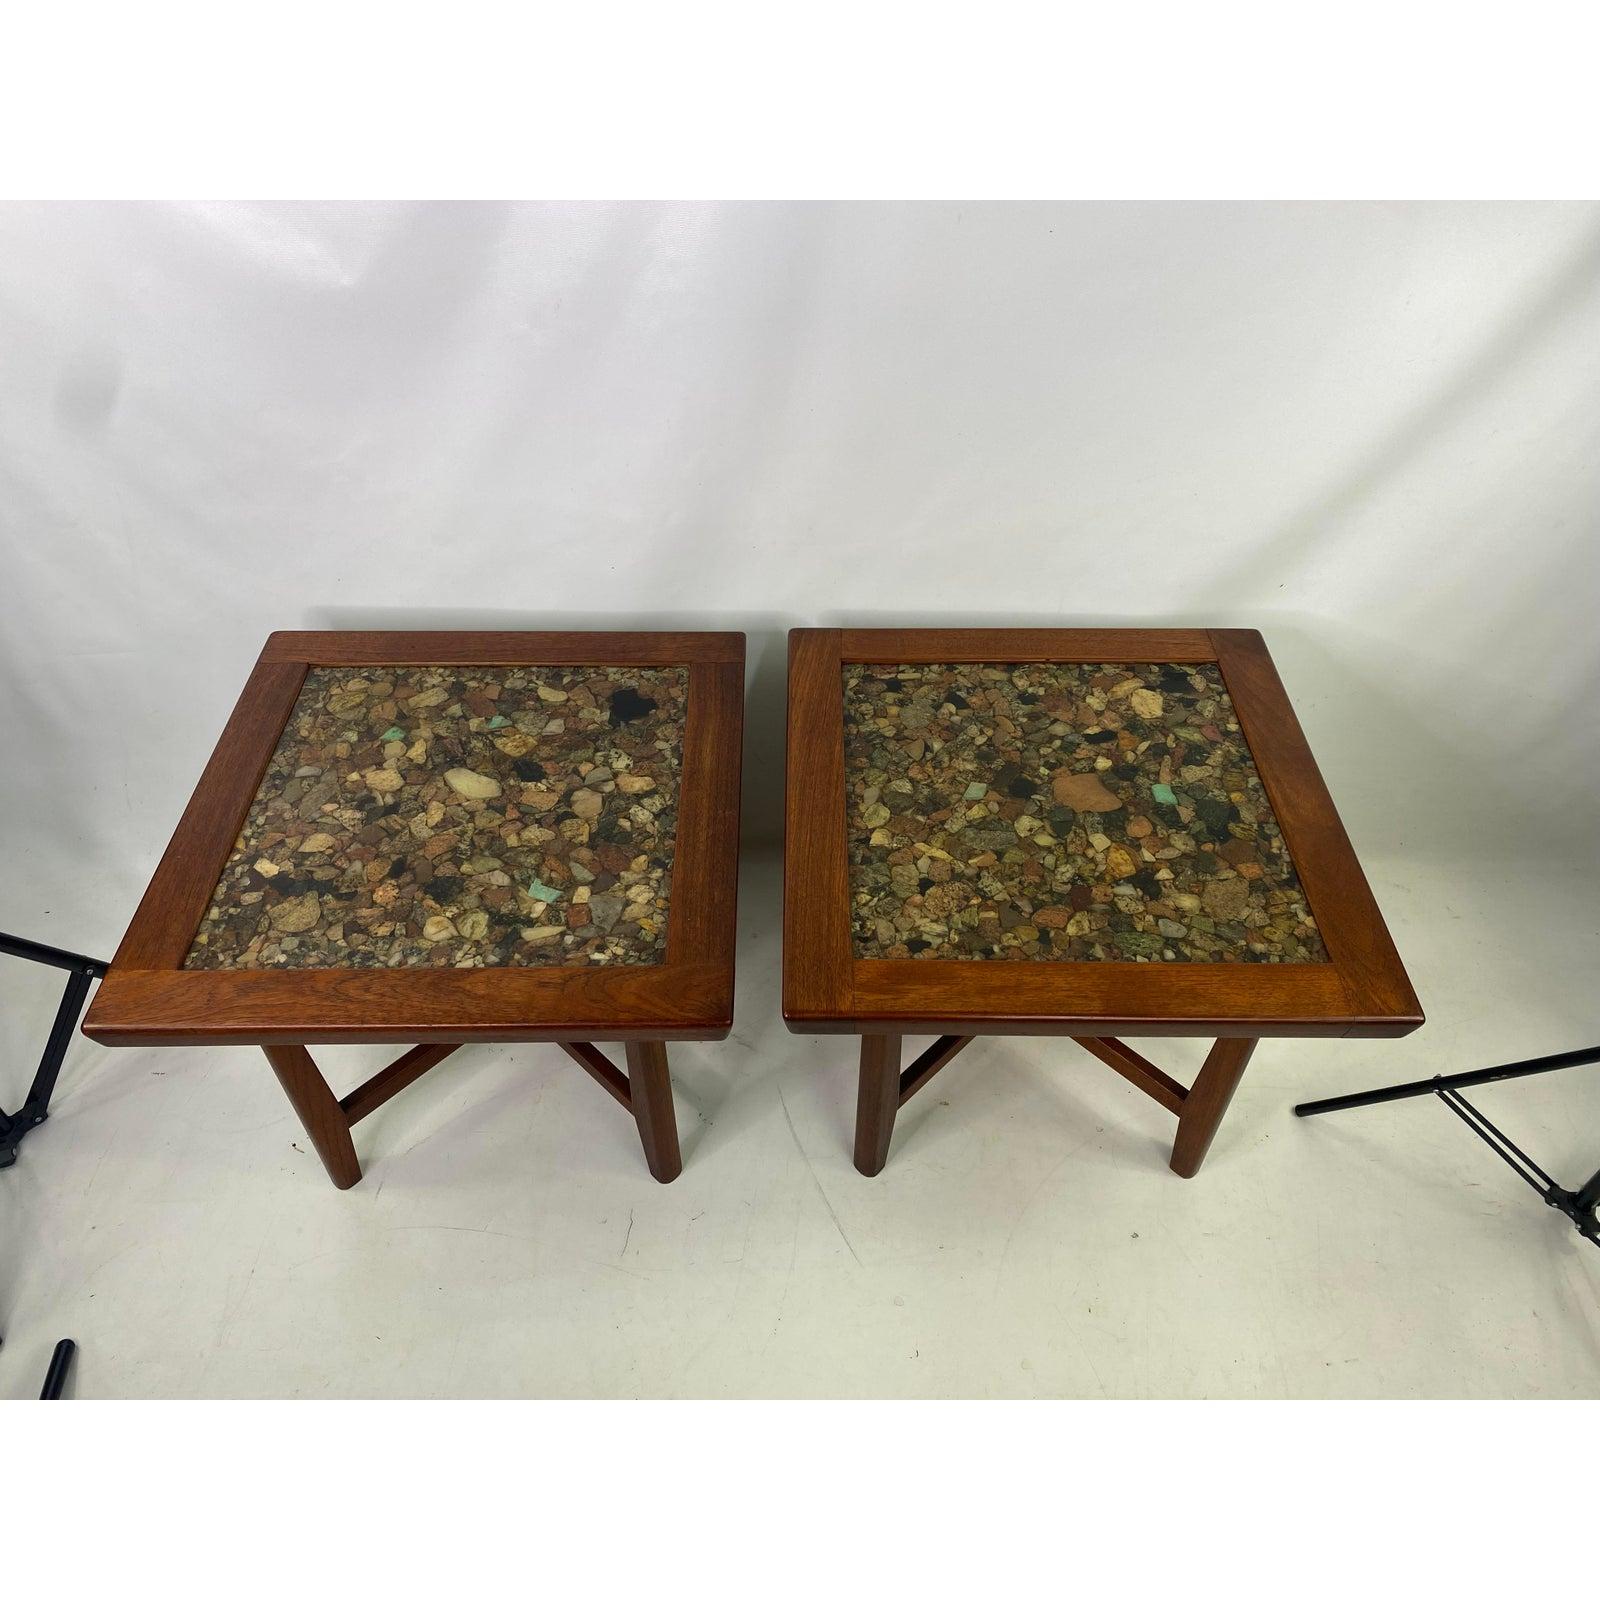 Vintage Modern Teak and Rock Resin tables Designed by Arvid Haerum.